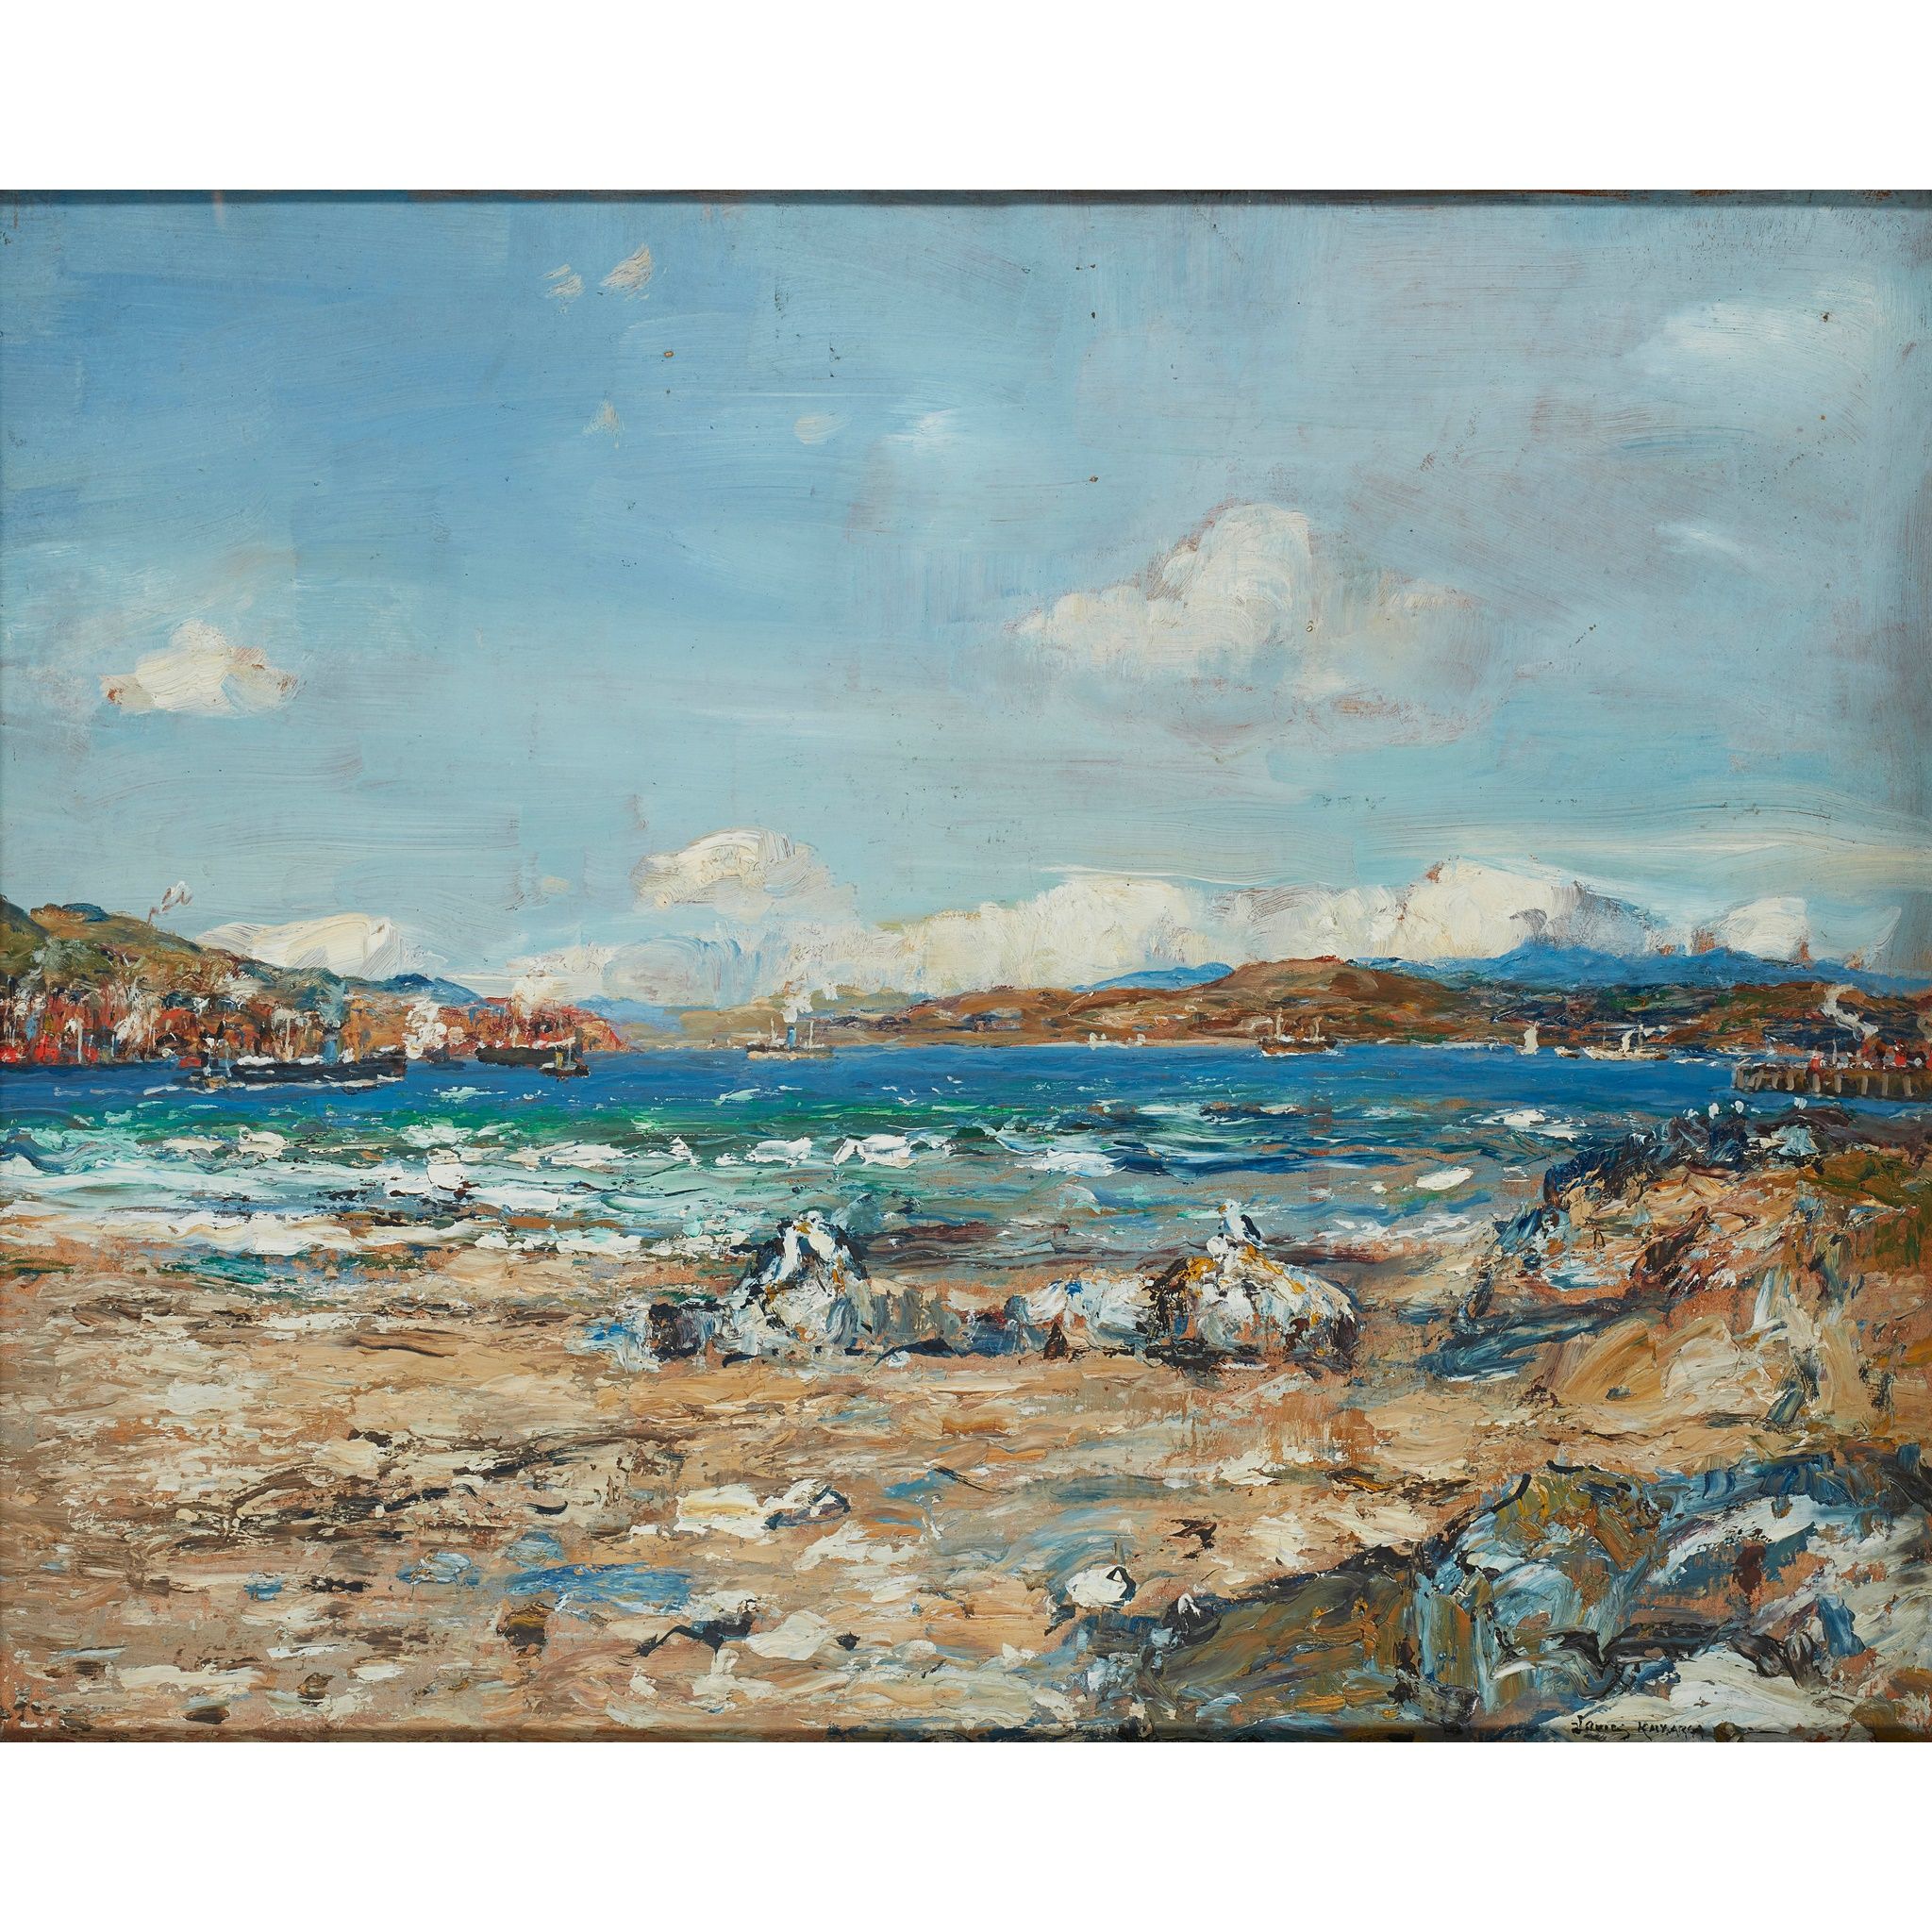 JAMES KAY R.S.A., R.S.W. (SCOTTISH 1858-1942) ON THE BEACH CARDROSS